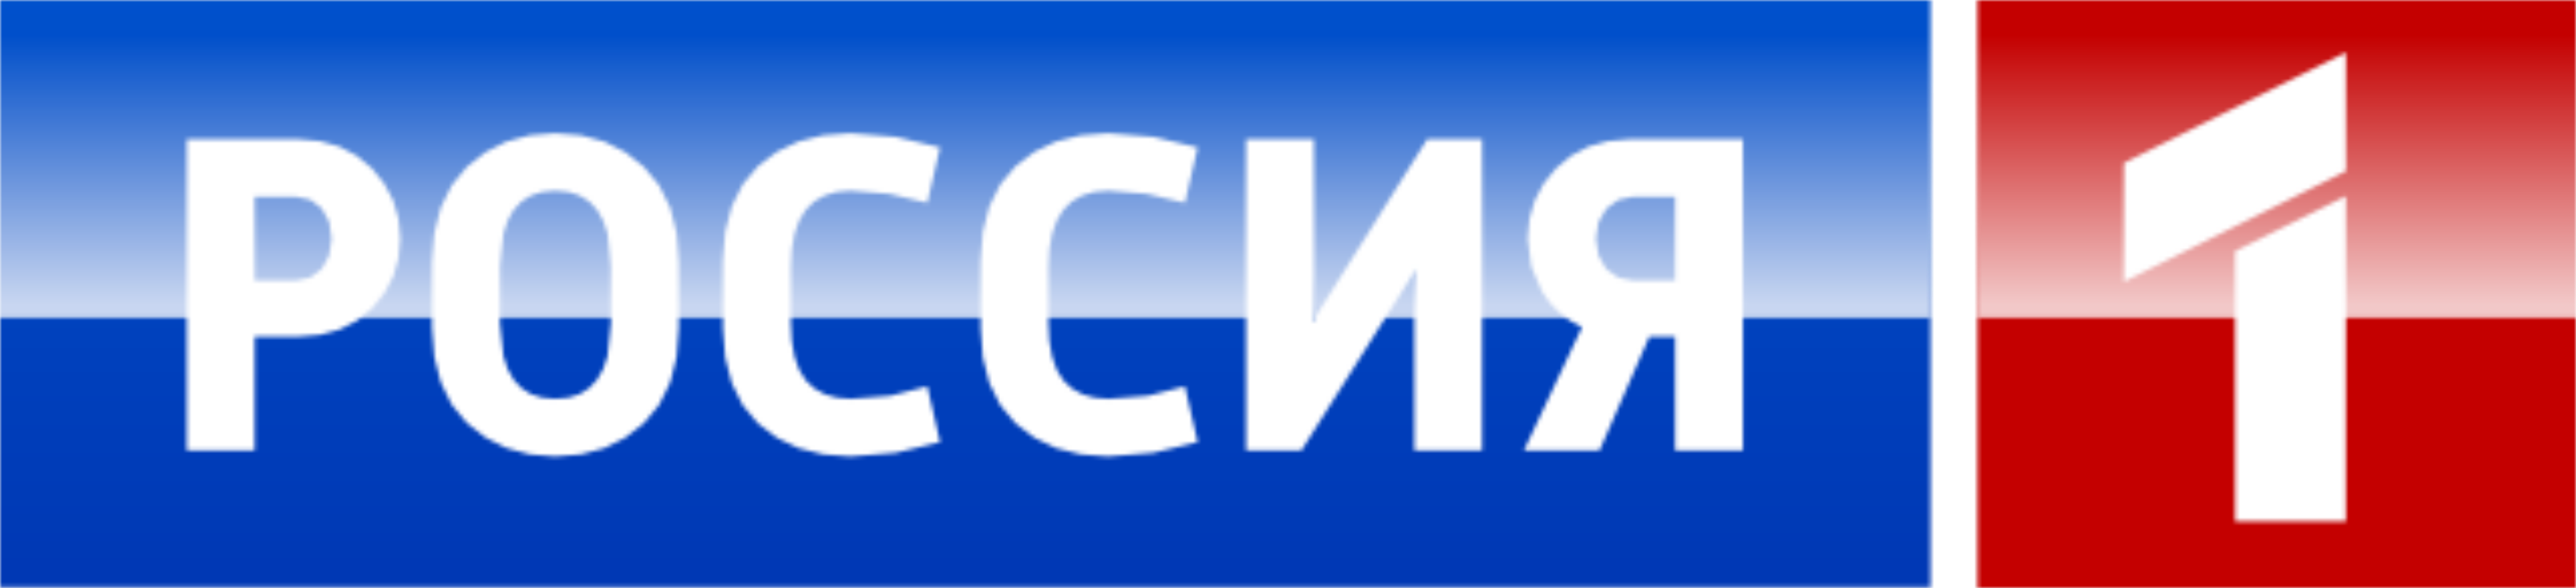 Russia 1 TV Logo